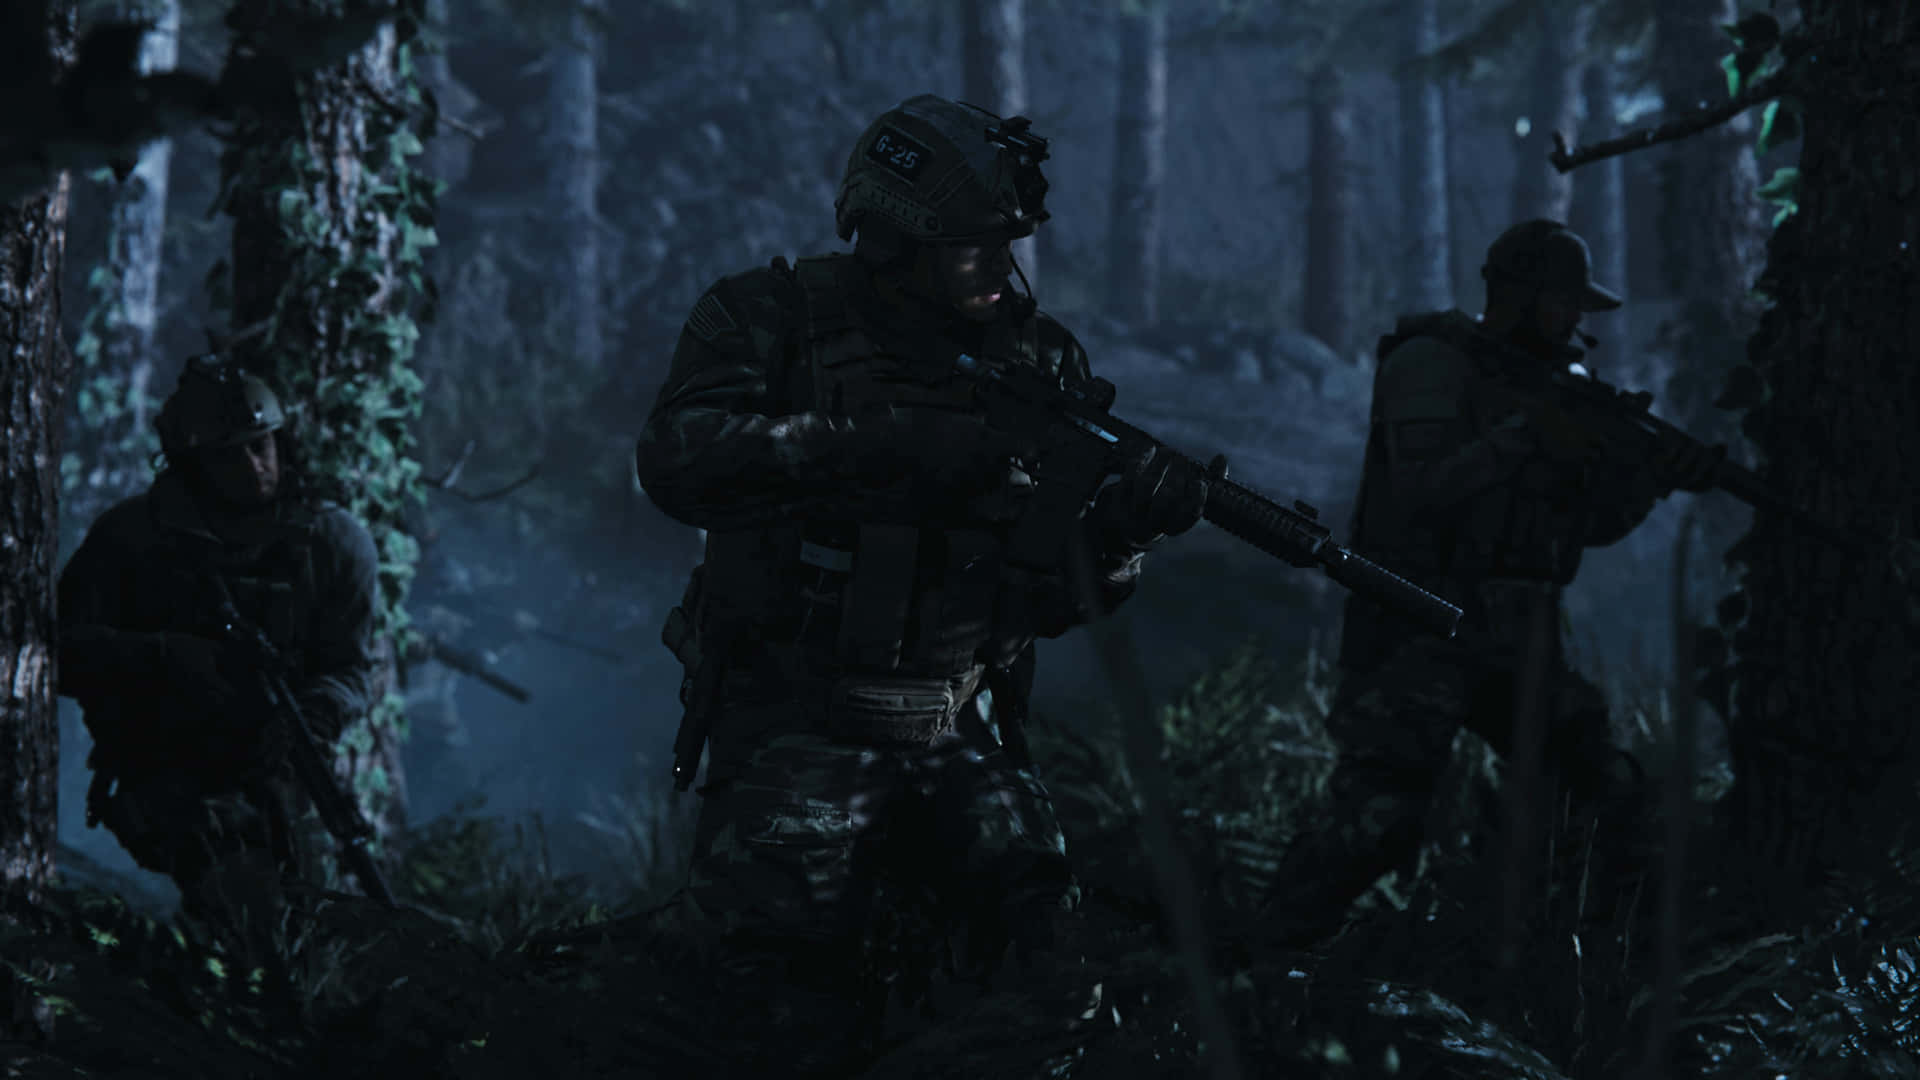 4kcall Of Duty Modern Warfare Bakgrundssoldater I En Mörk Skog